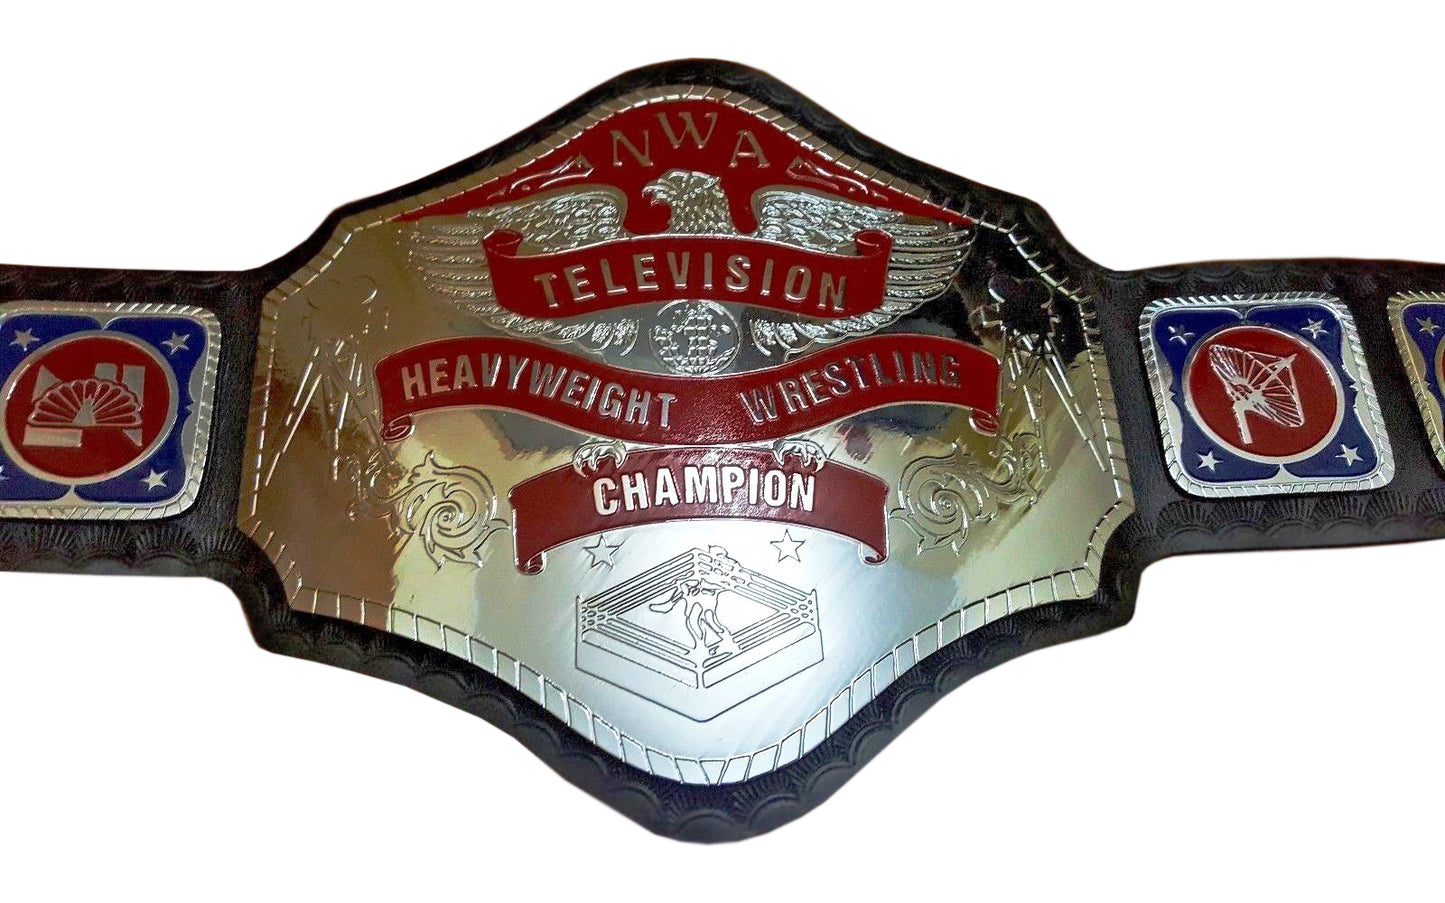 NWA World Television Heavyweight Wrestling Championship Belt